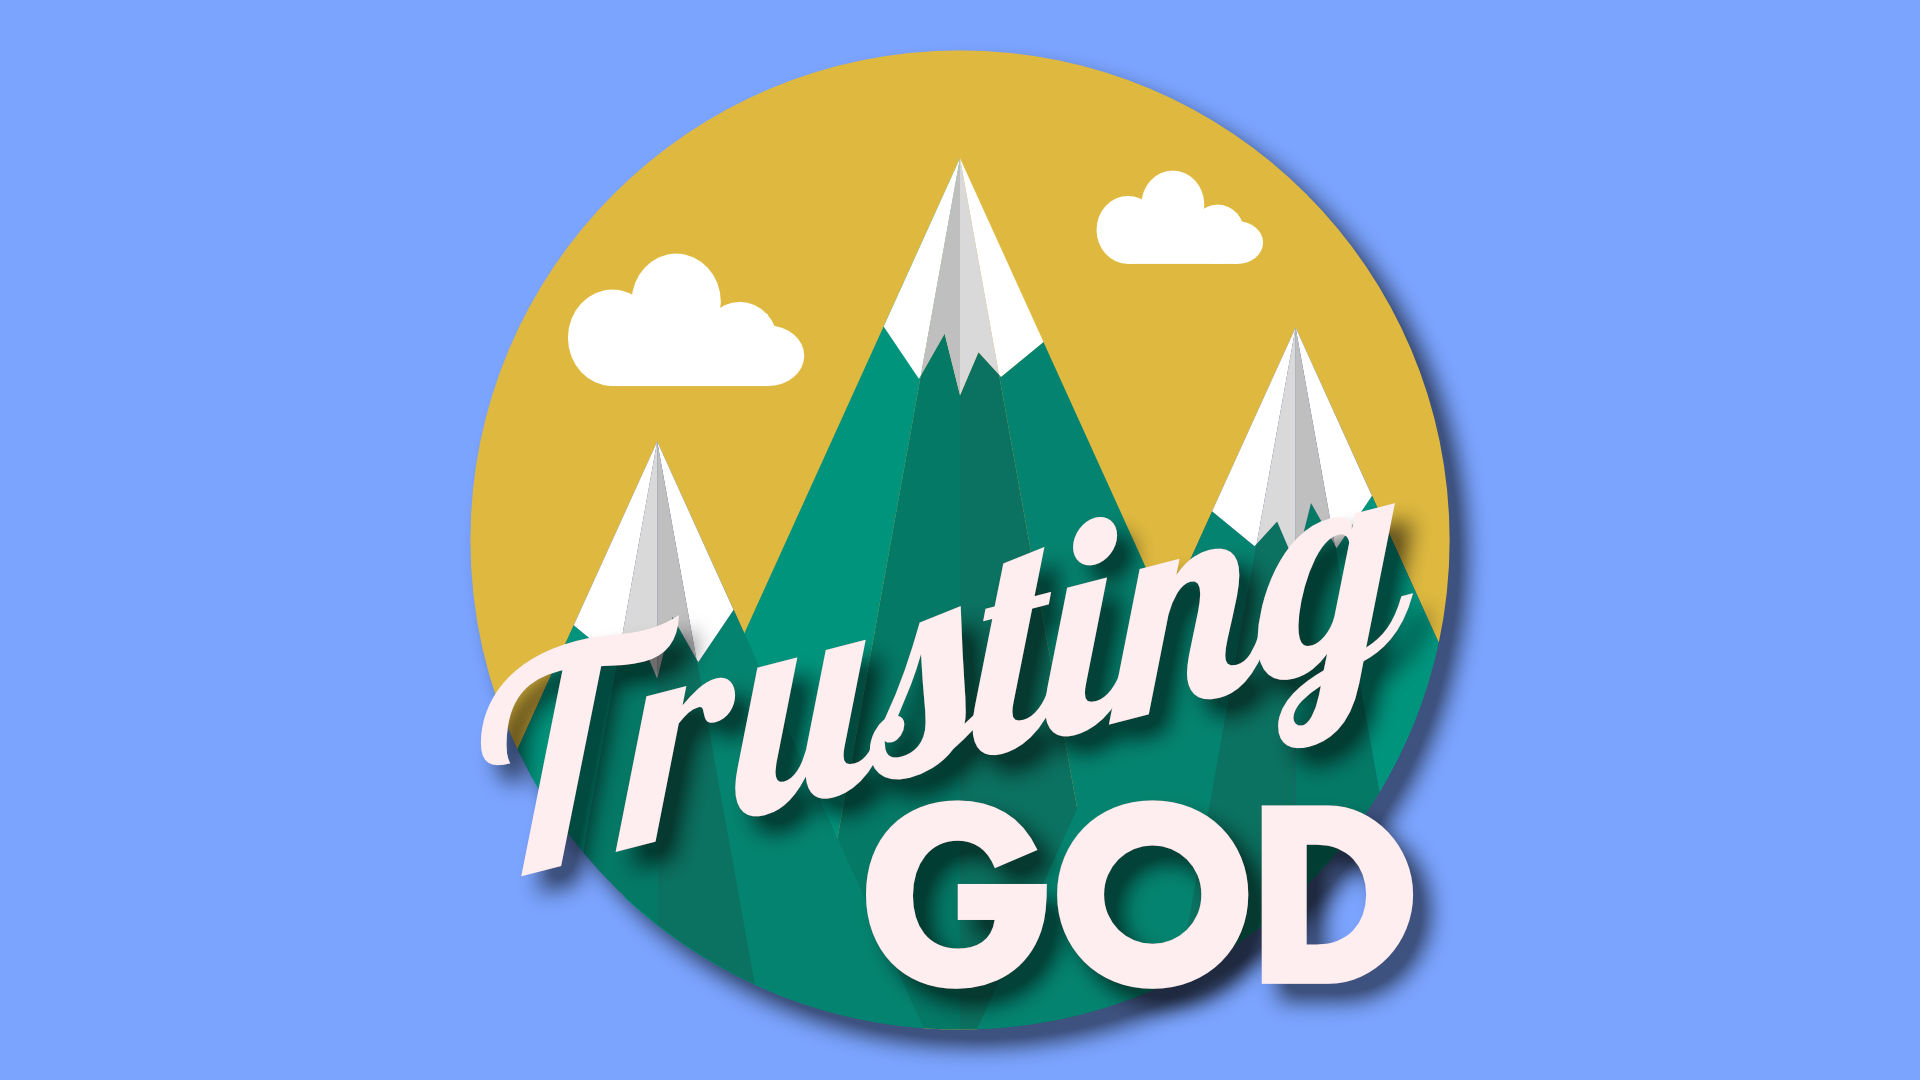 Trusting God • May 27 - June 3, 2018